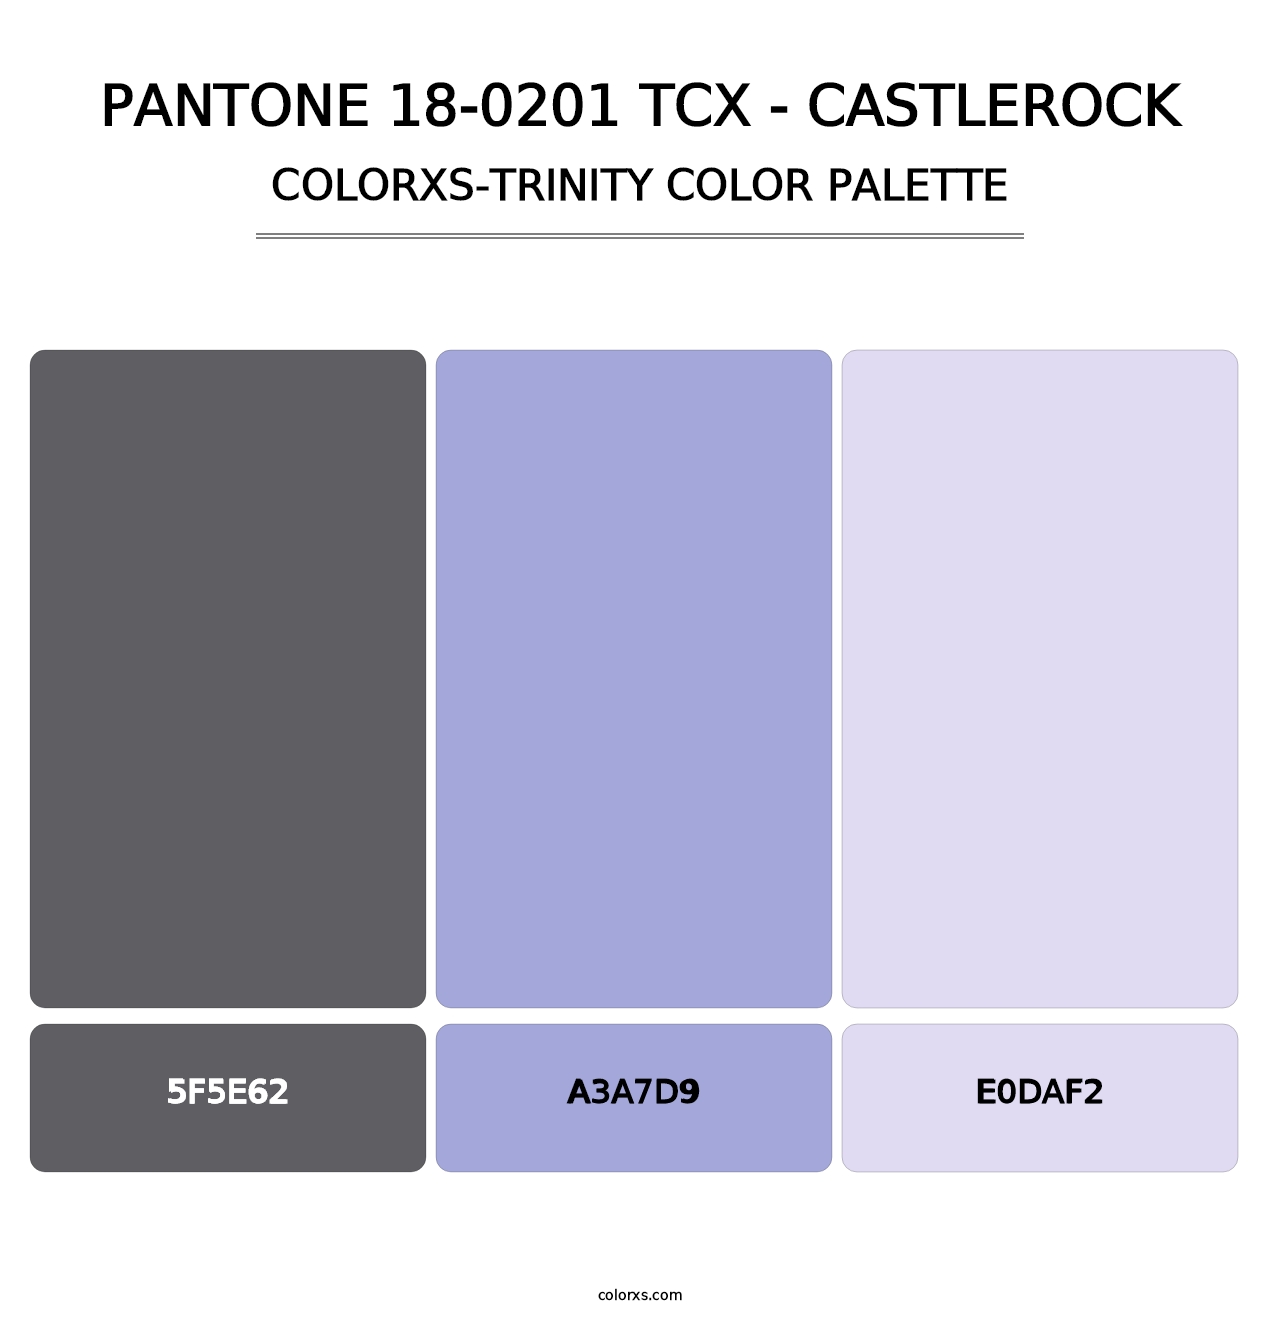 PANTONE 18-0201 TCX - Castlerock - Colorxs Trinity Palette